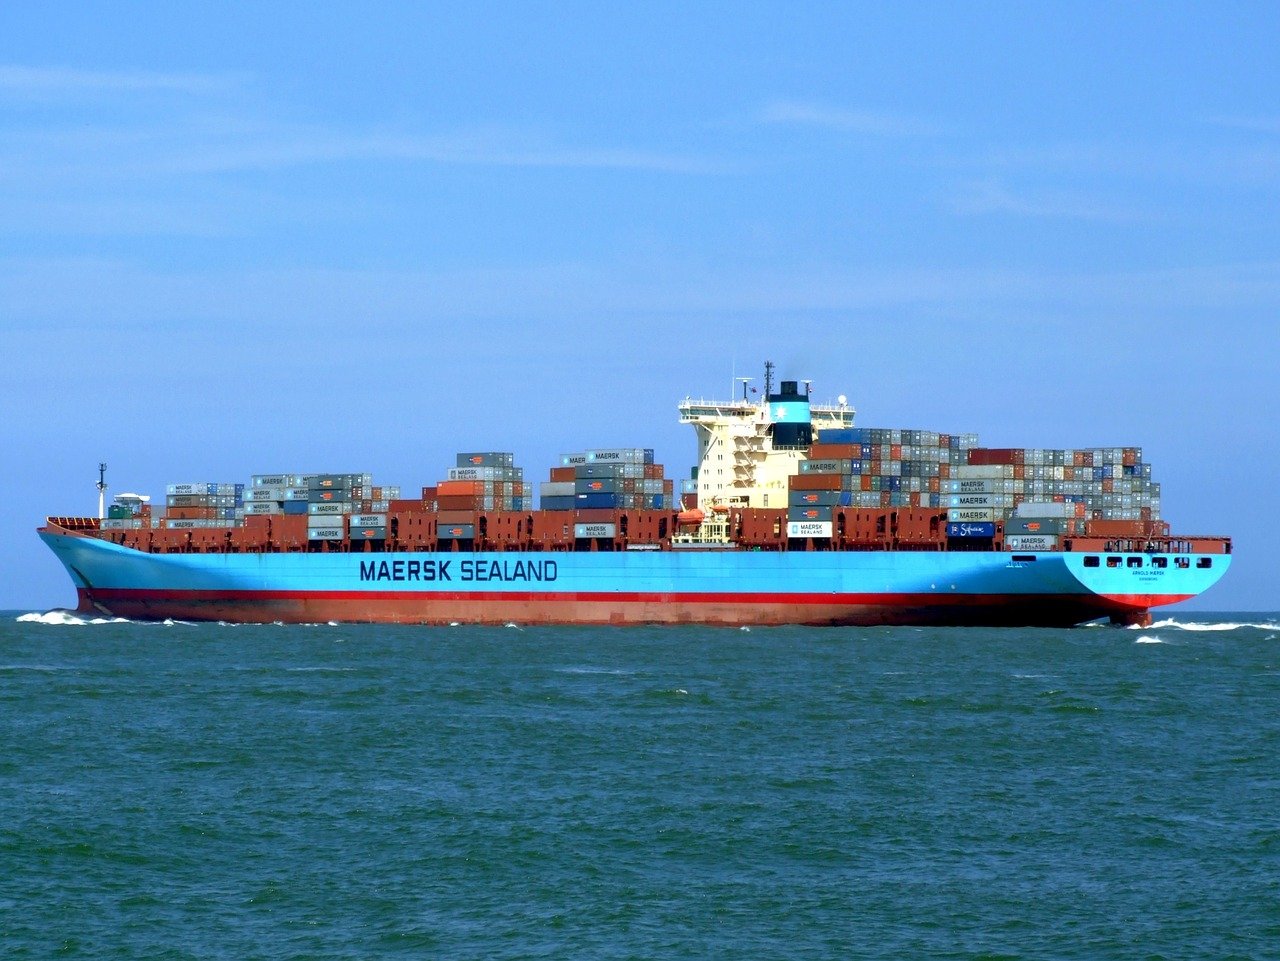 2000 redundancies at Maersk, curtain falls on Safmarine and Damco